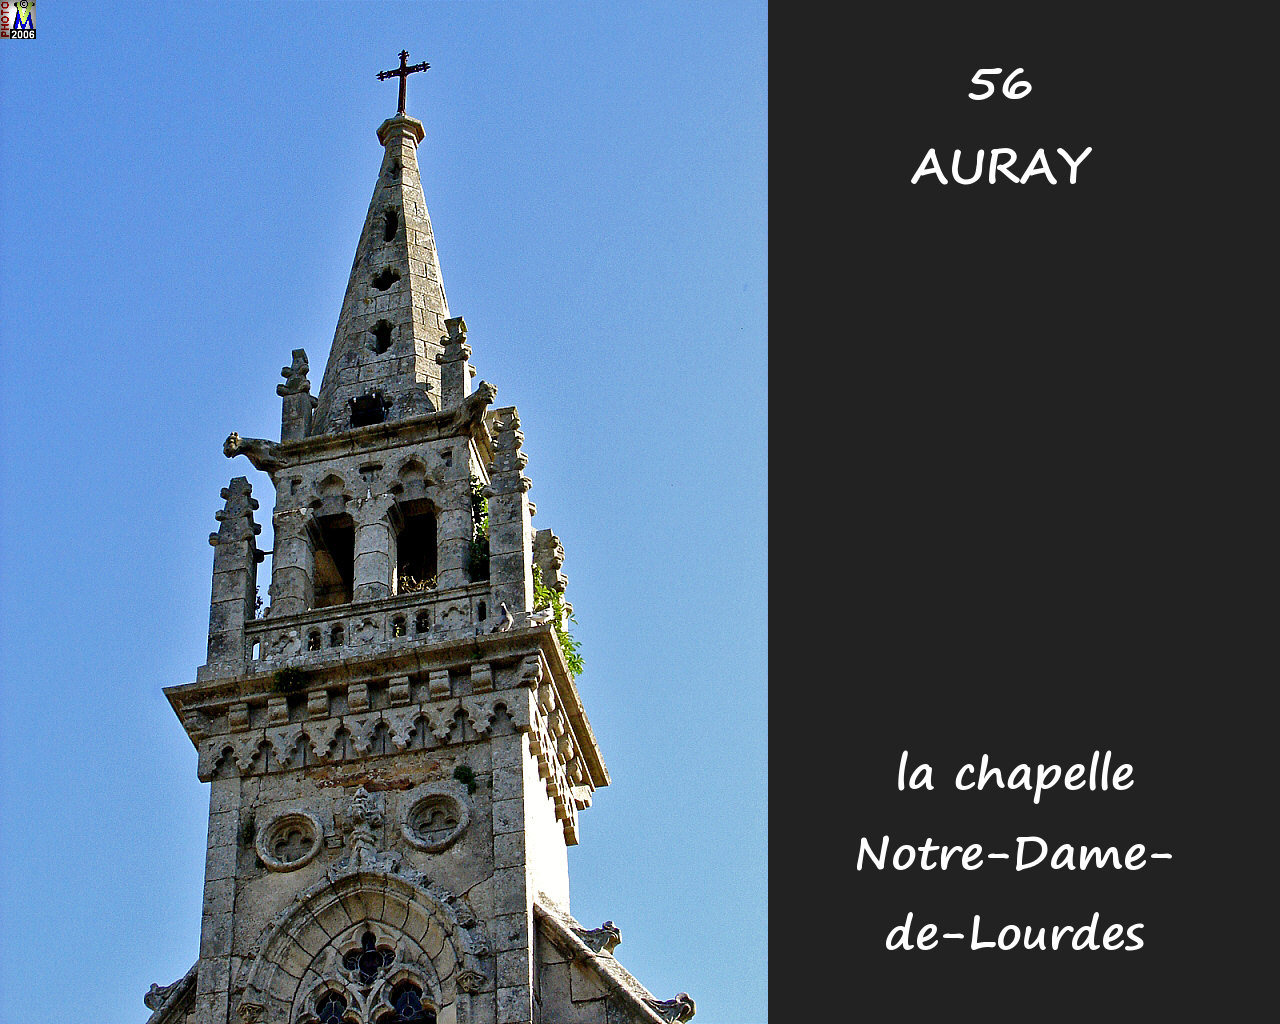 56AURAY_chapelle_ND_Lourdes_104.jpg